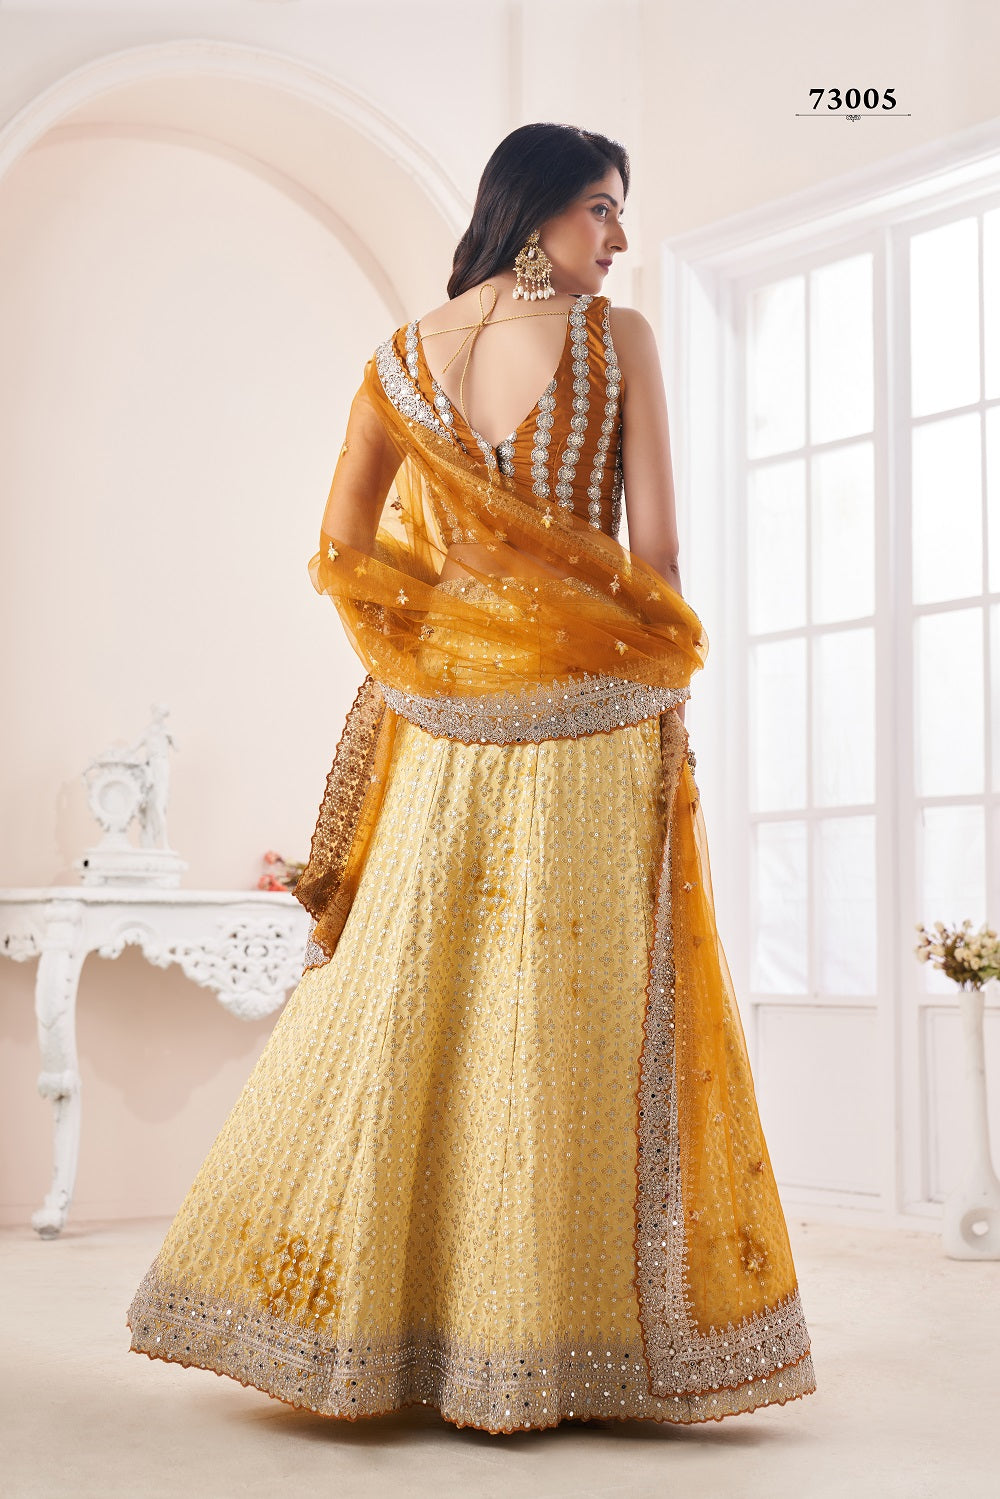 Fabulous Yellow Color Lehenga Choli For Wedding